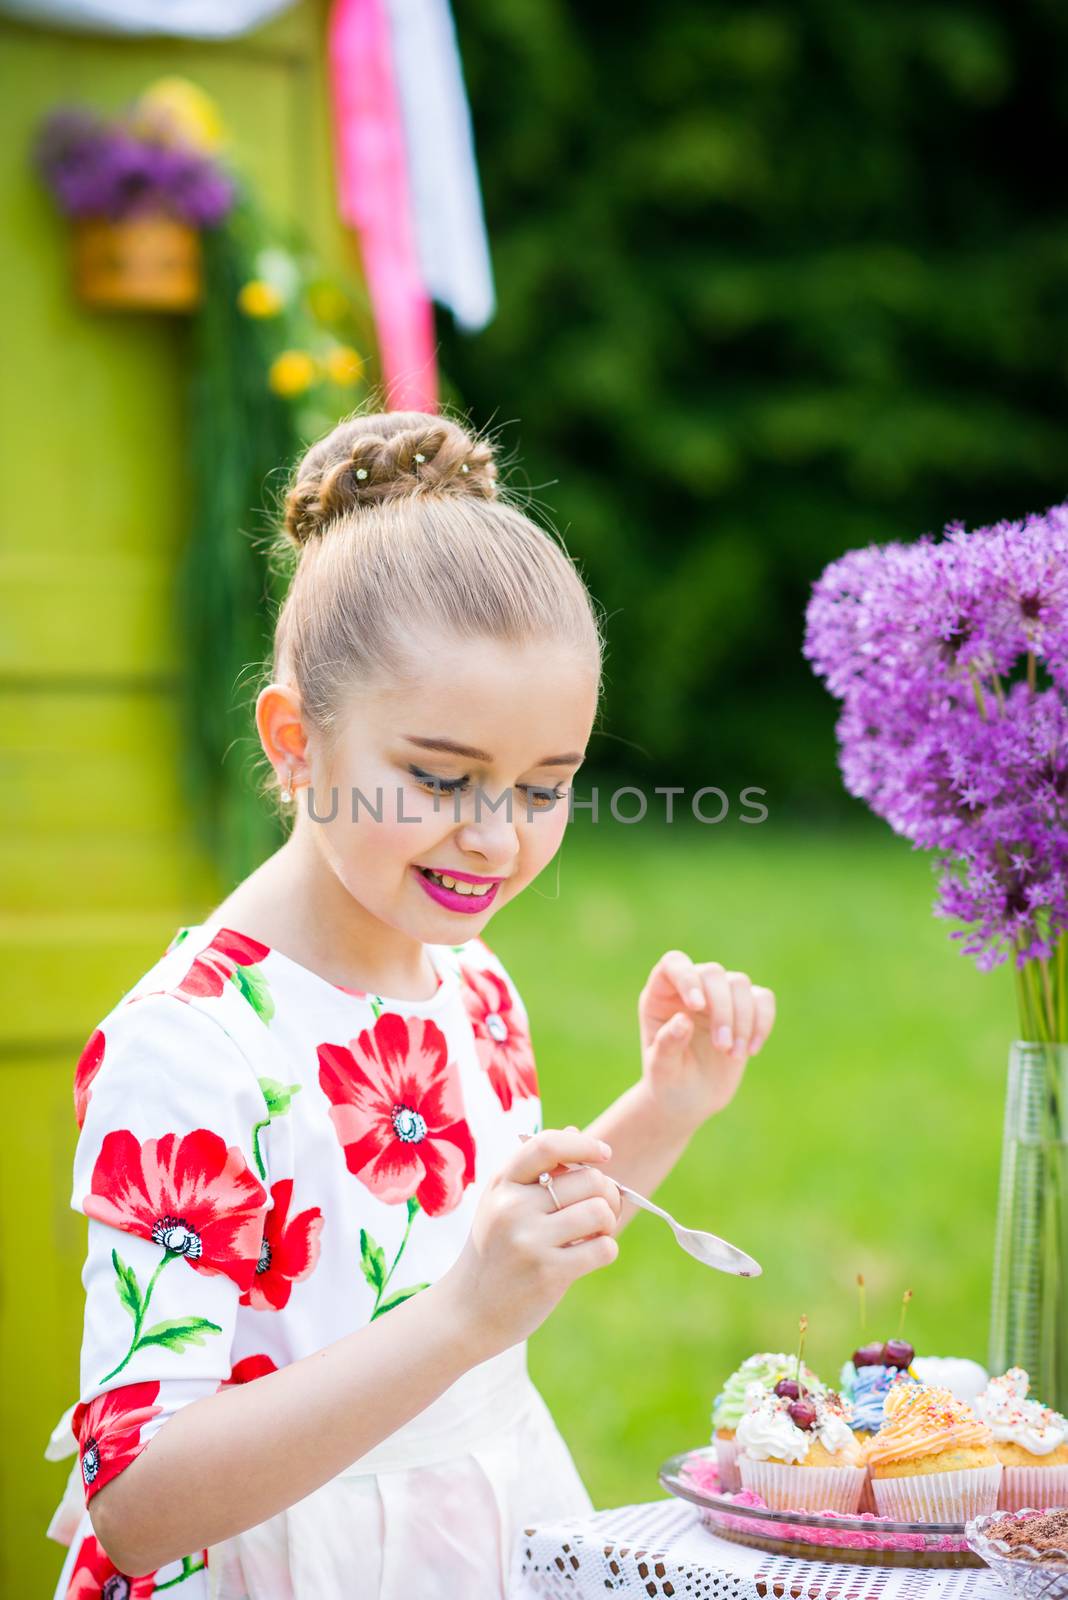 Girl decorating cupcakes in backyard by okskukuruza